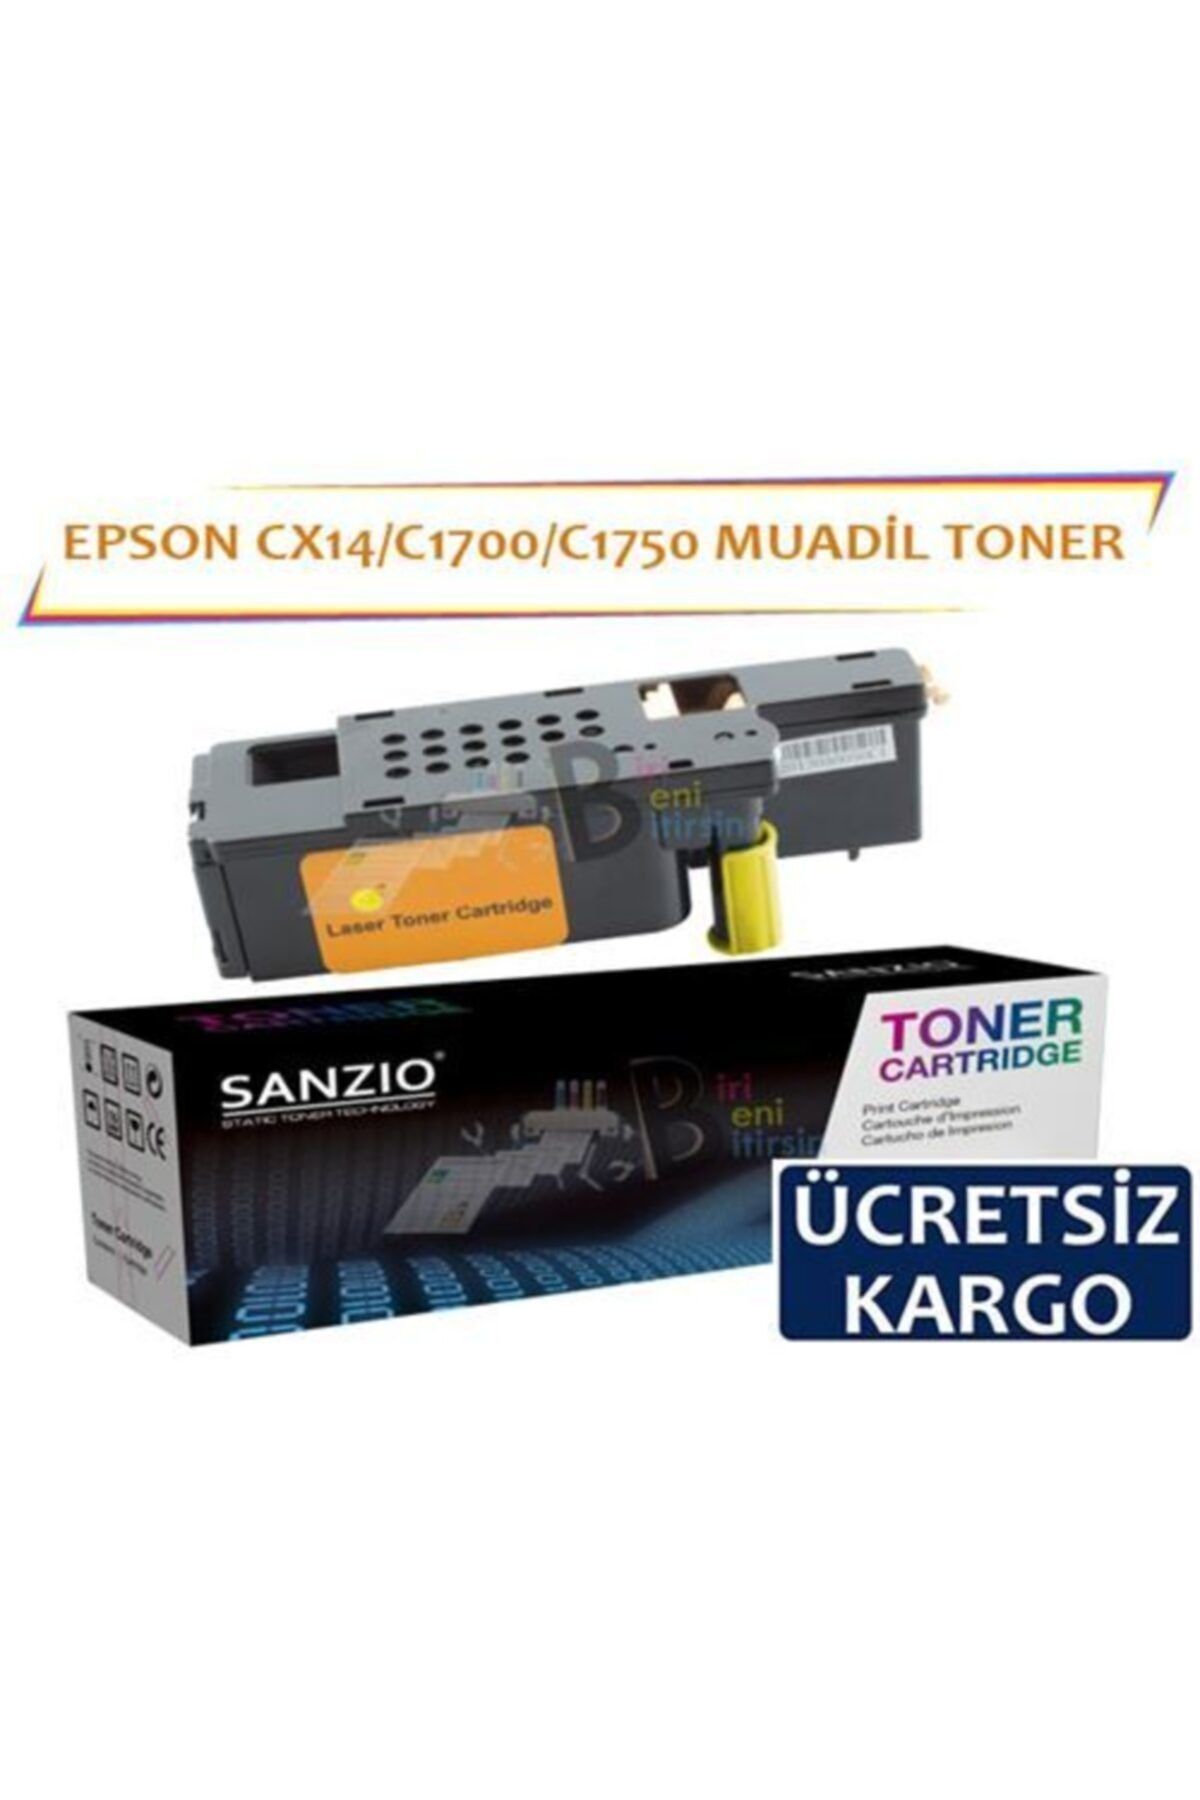 BBB Epson Cx17 Muadil Toner Mavi C1700 C1750